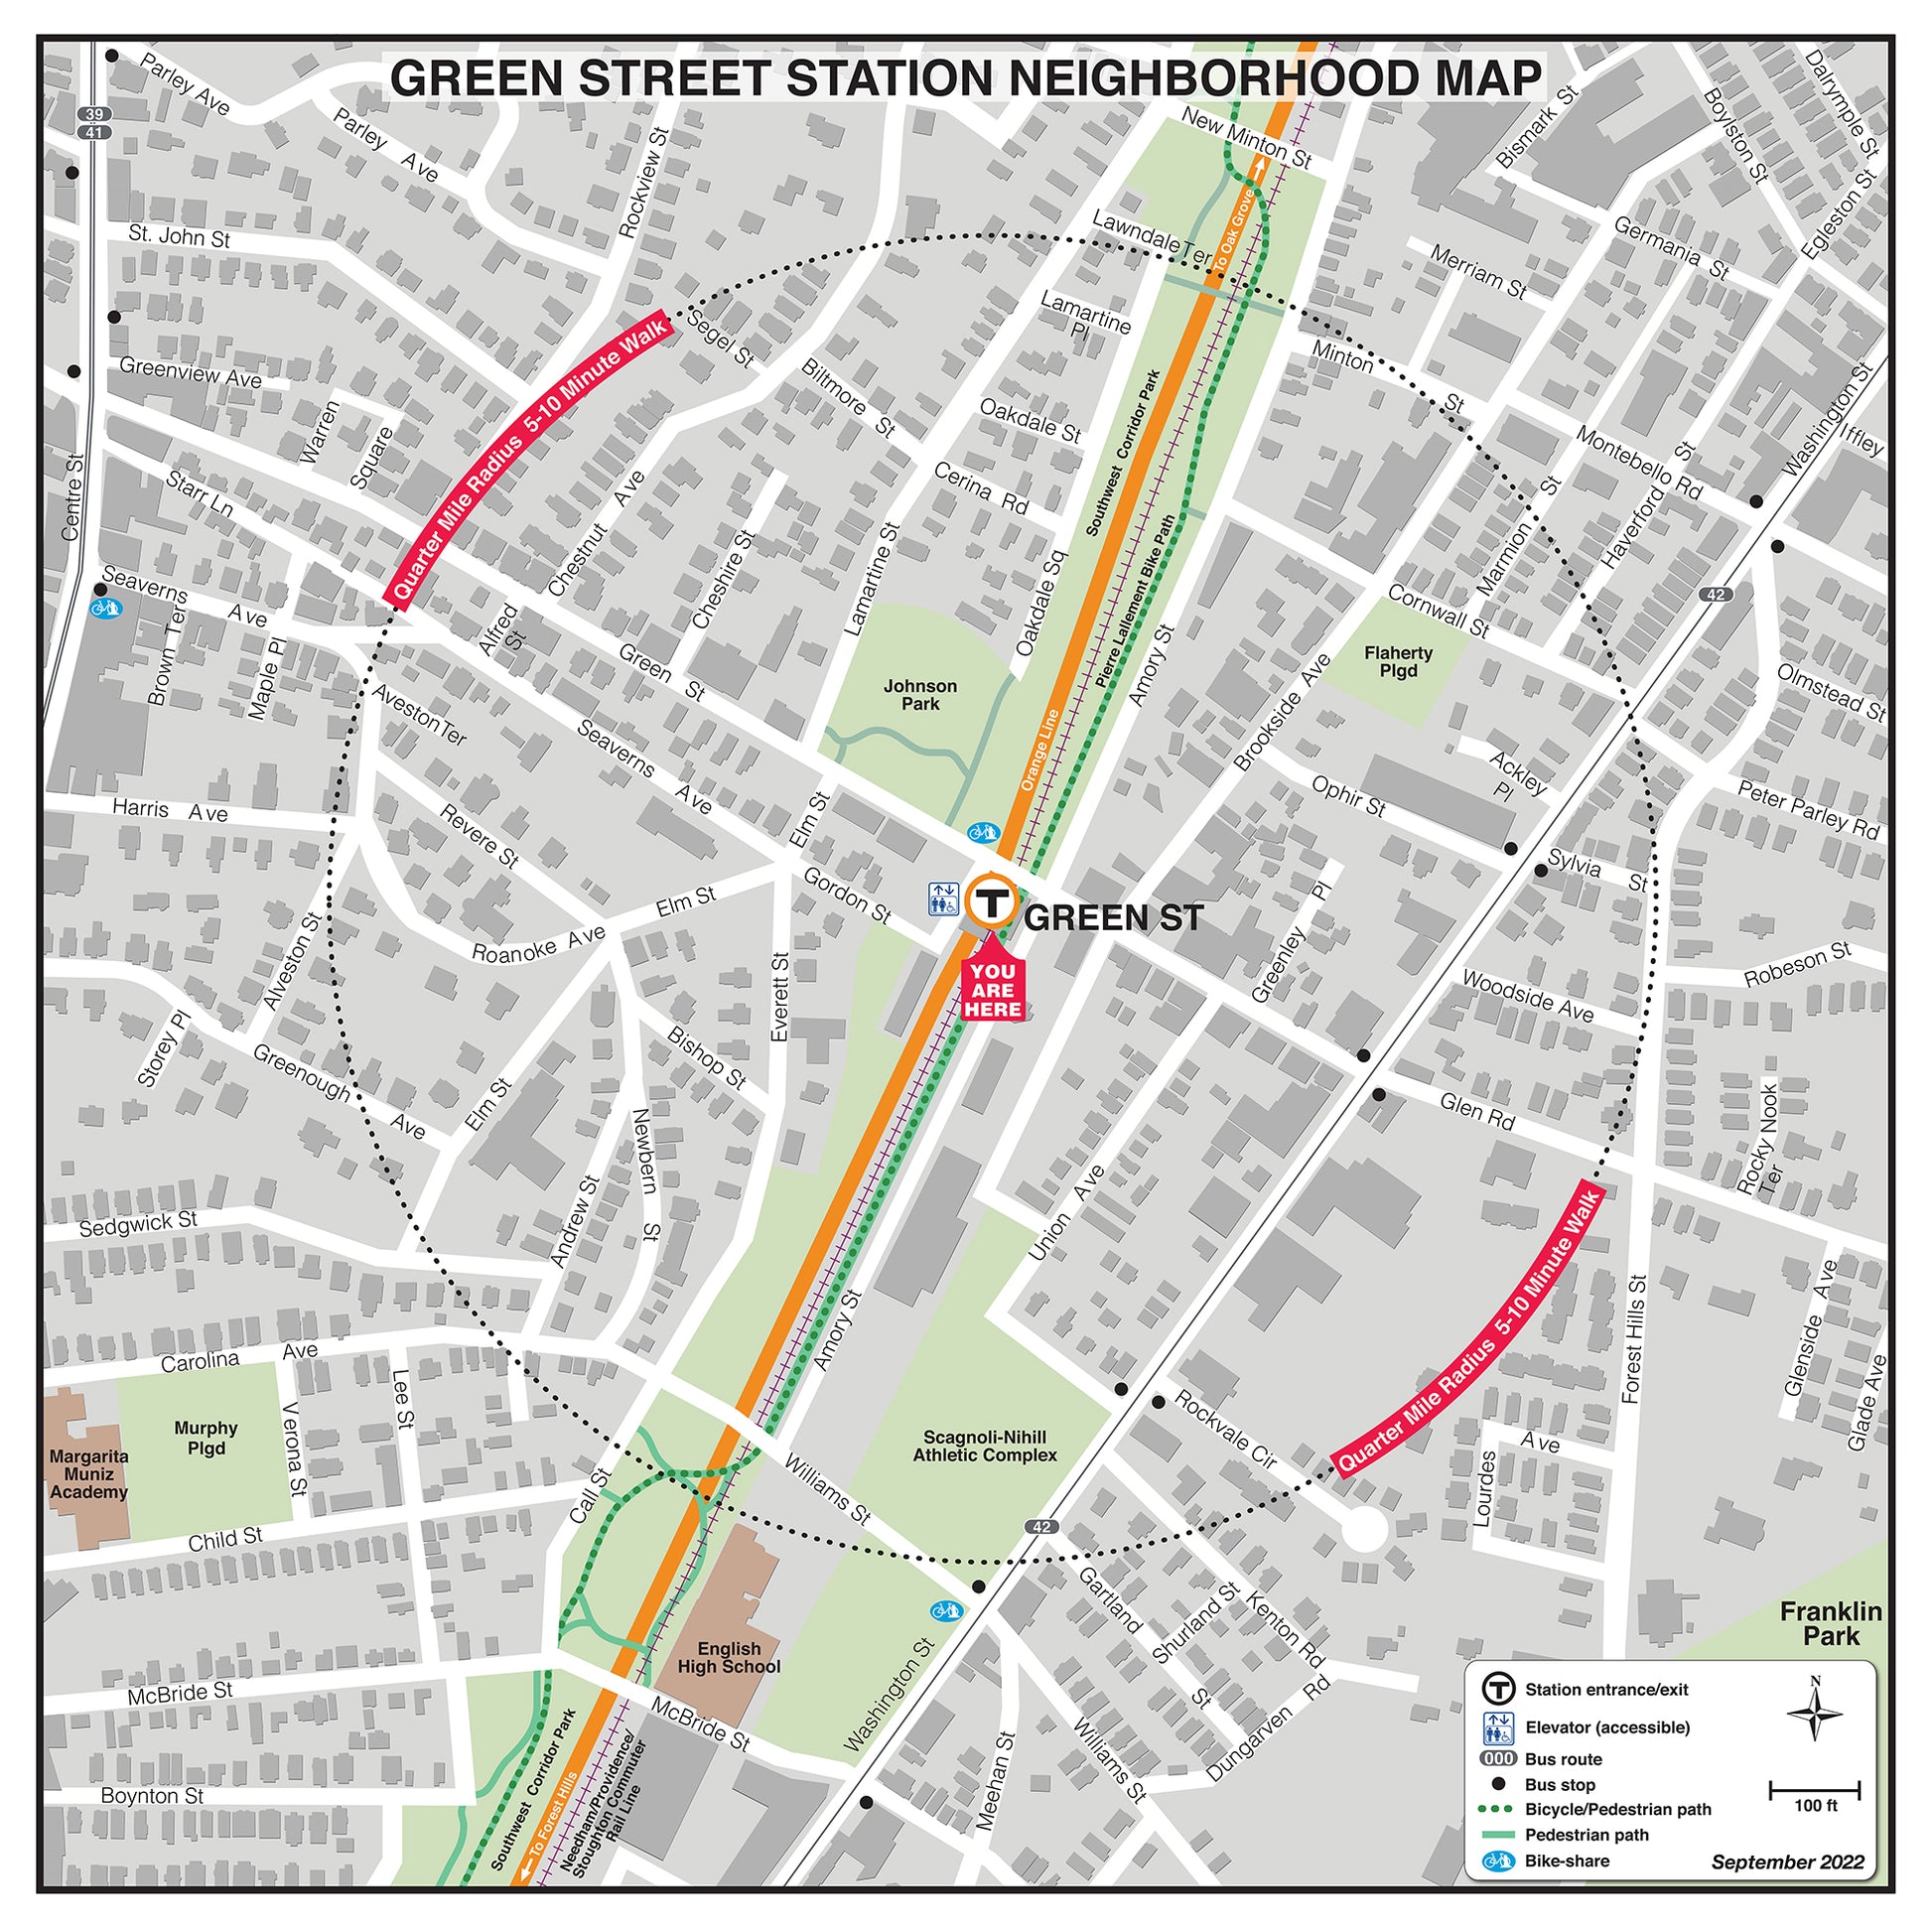 Orange Line Station Neighborhood Map: Green Street (Sept. 2022)